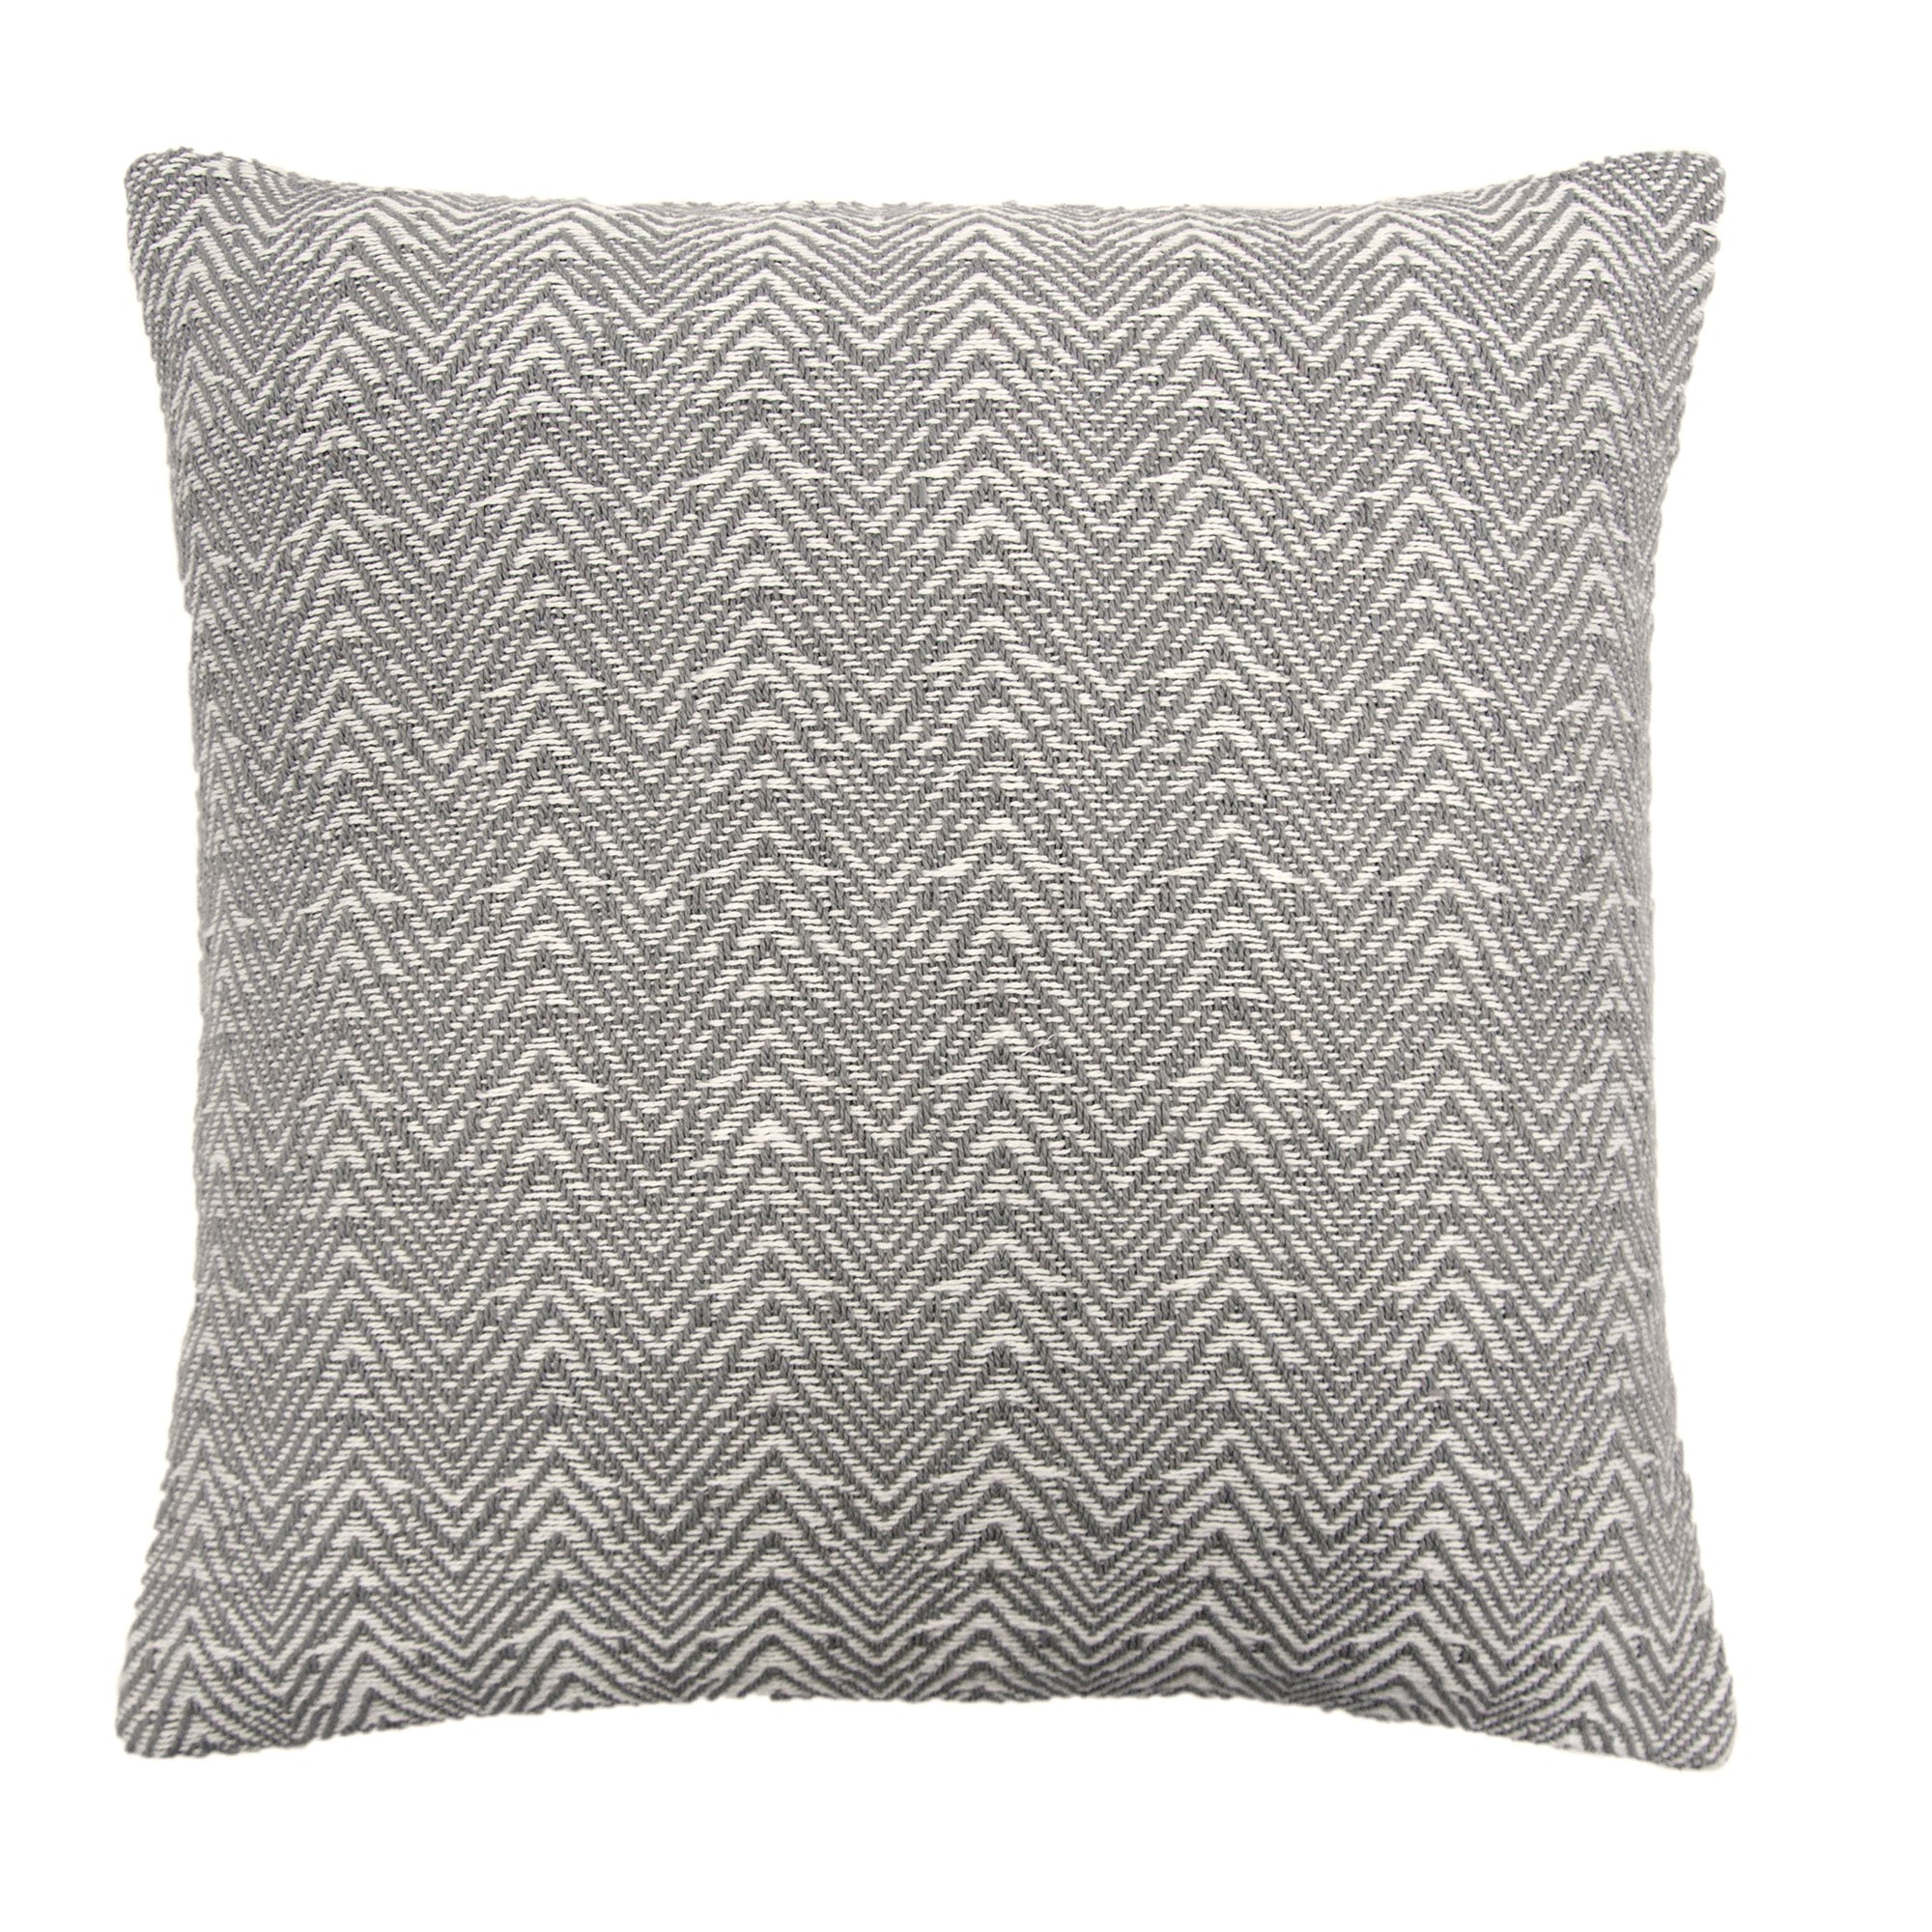 Herringbone - 100% Cotton Filled Cushion - by Appletree Loft